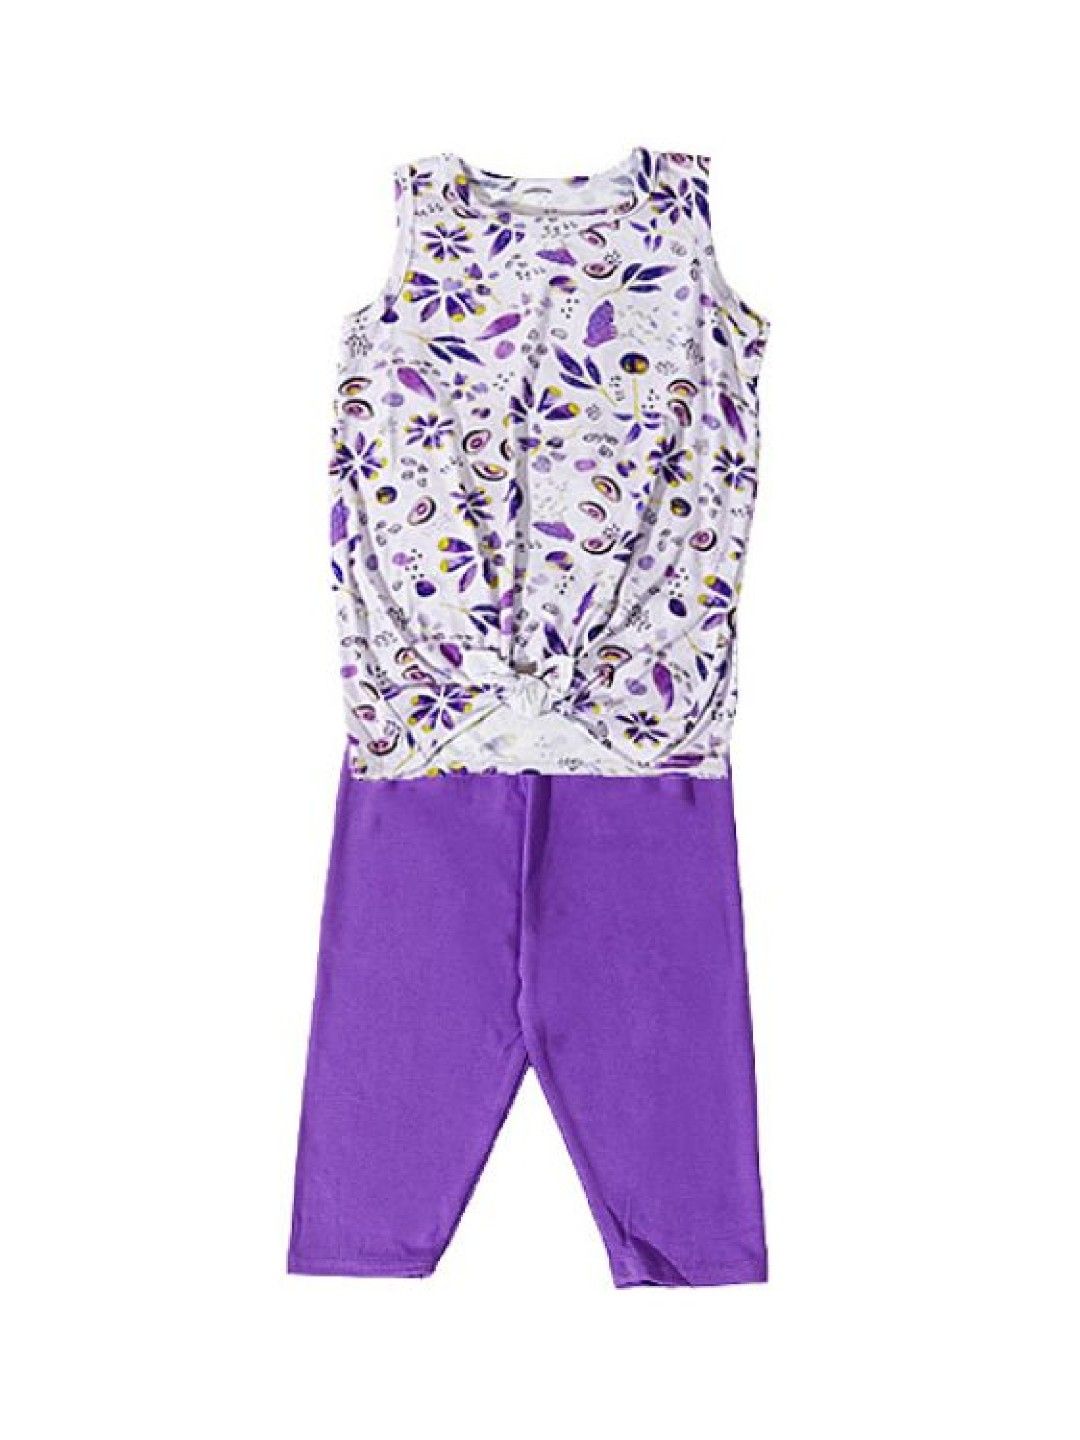 bean fashion Alessa Lanot Playwear Ubecado Sleeveless with Plain Capri Leggings (Multicolor- Image 2)